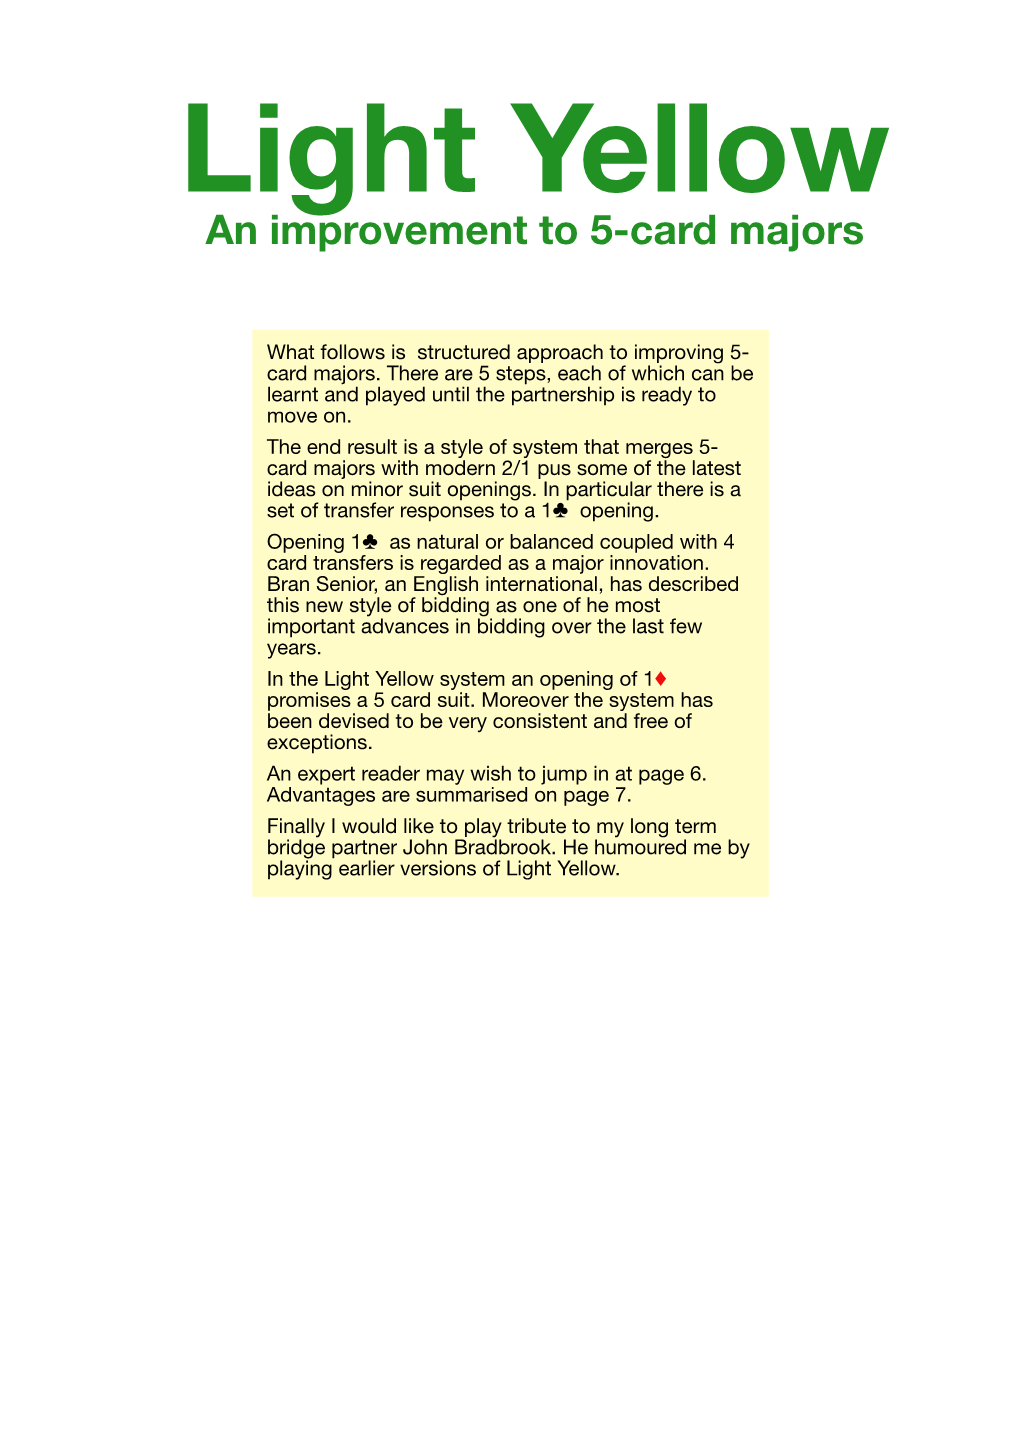 Light Yellow an Improvement to 5-Card Majors